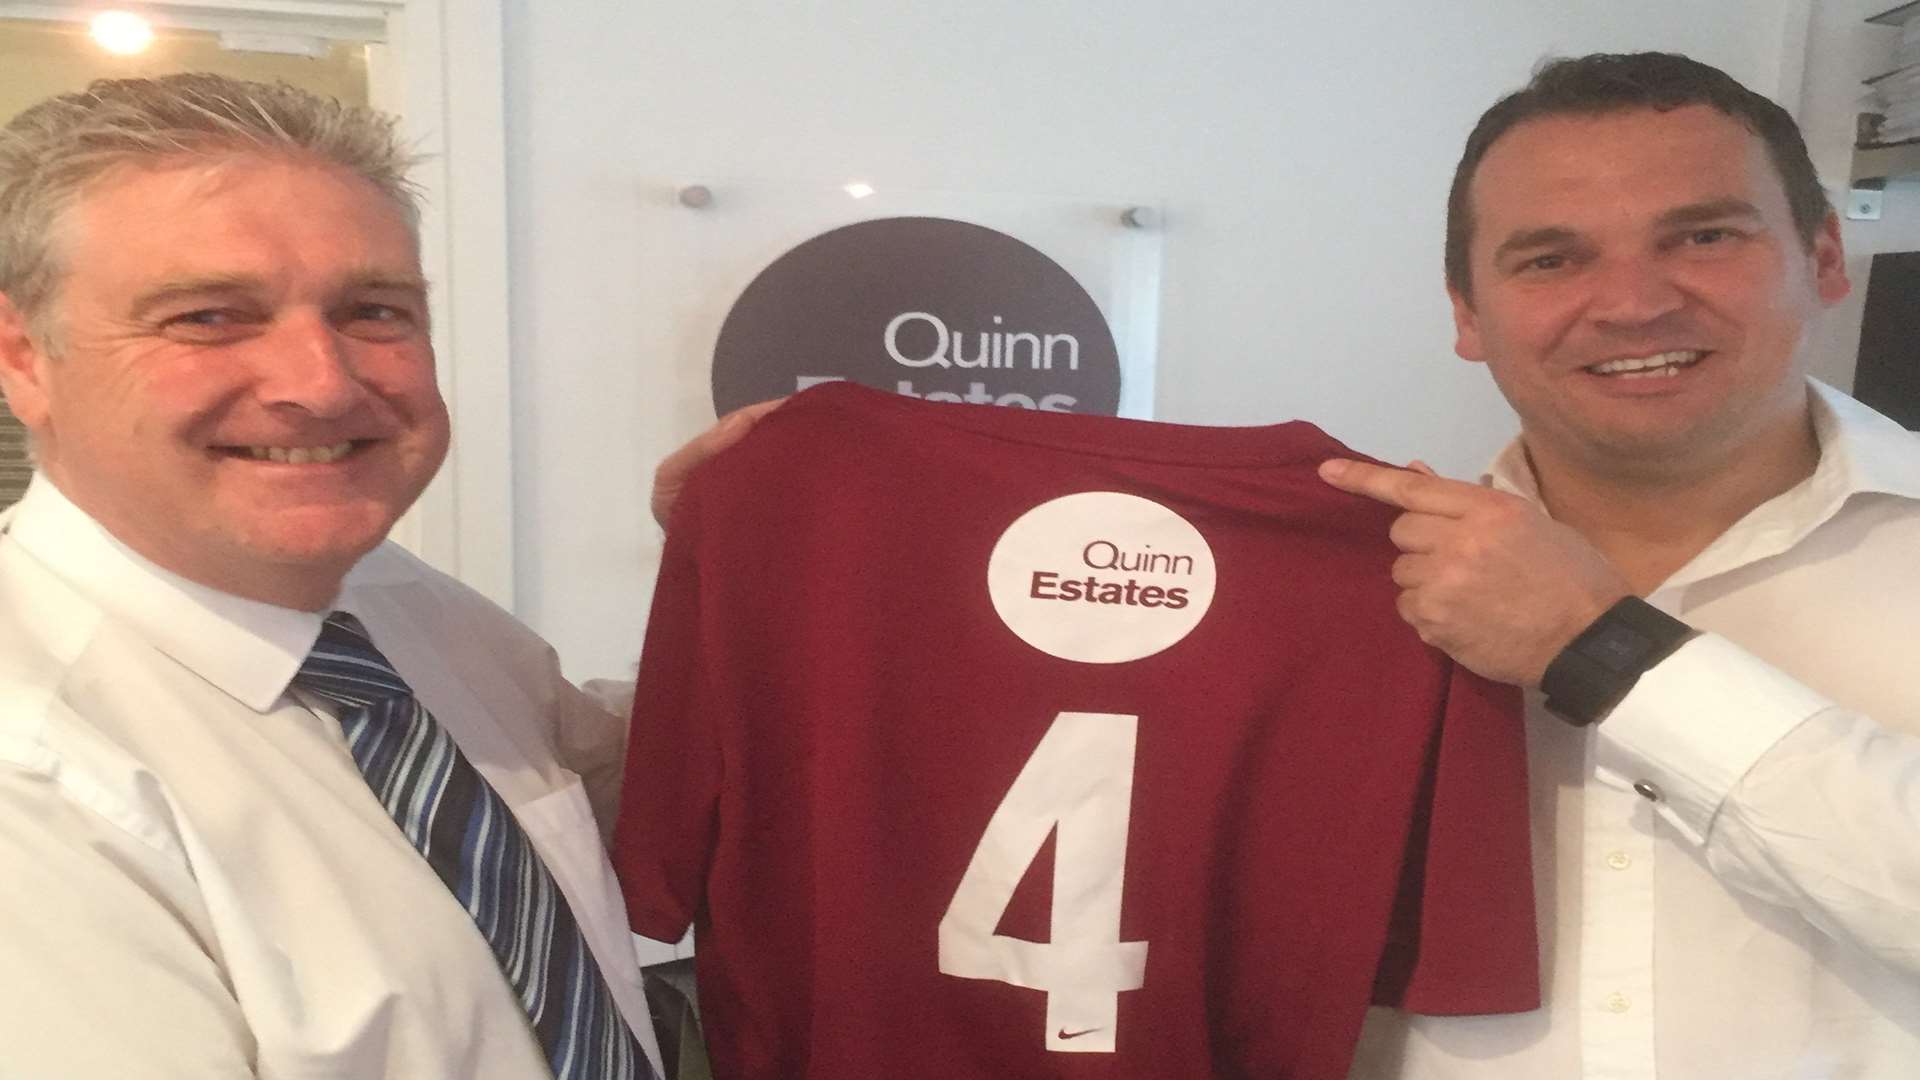 Club chairman Tim Clark with sponsor Mark Quinn and the Canterbury City FC kit sponsored by Quinn Estates.